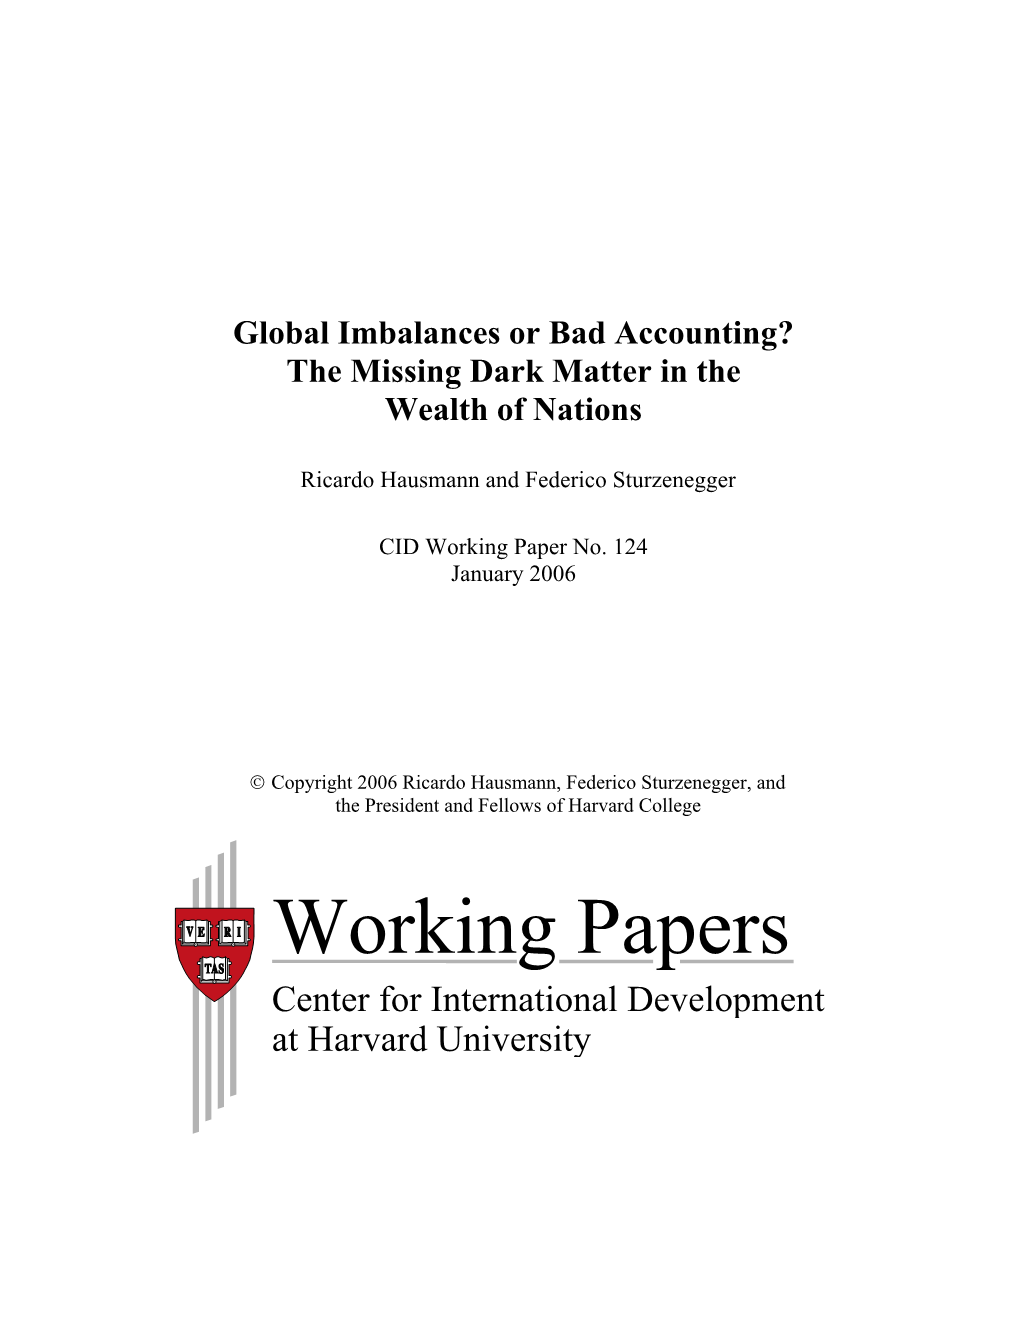 CID Working Paper No. 124: Global Imbalances Or Bad Accounting?